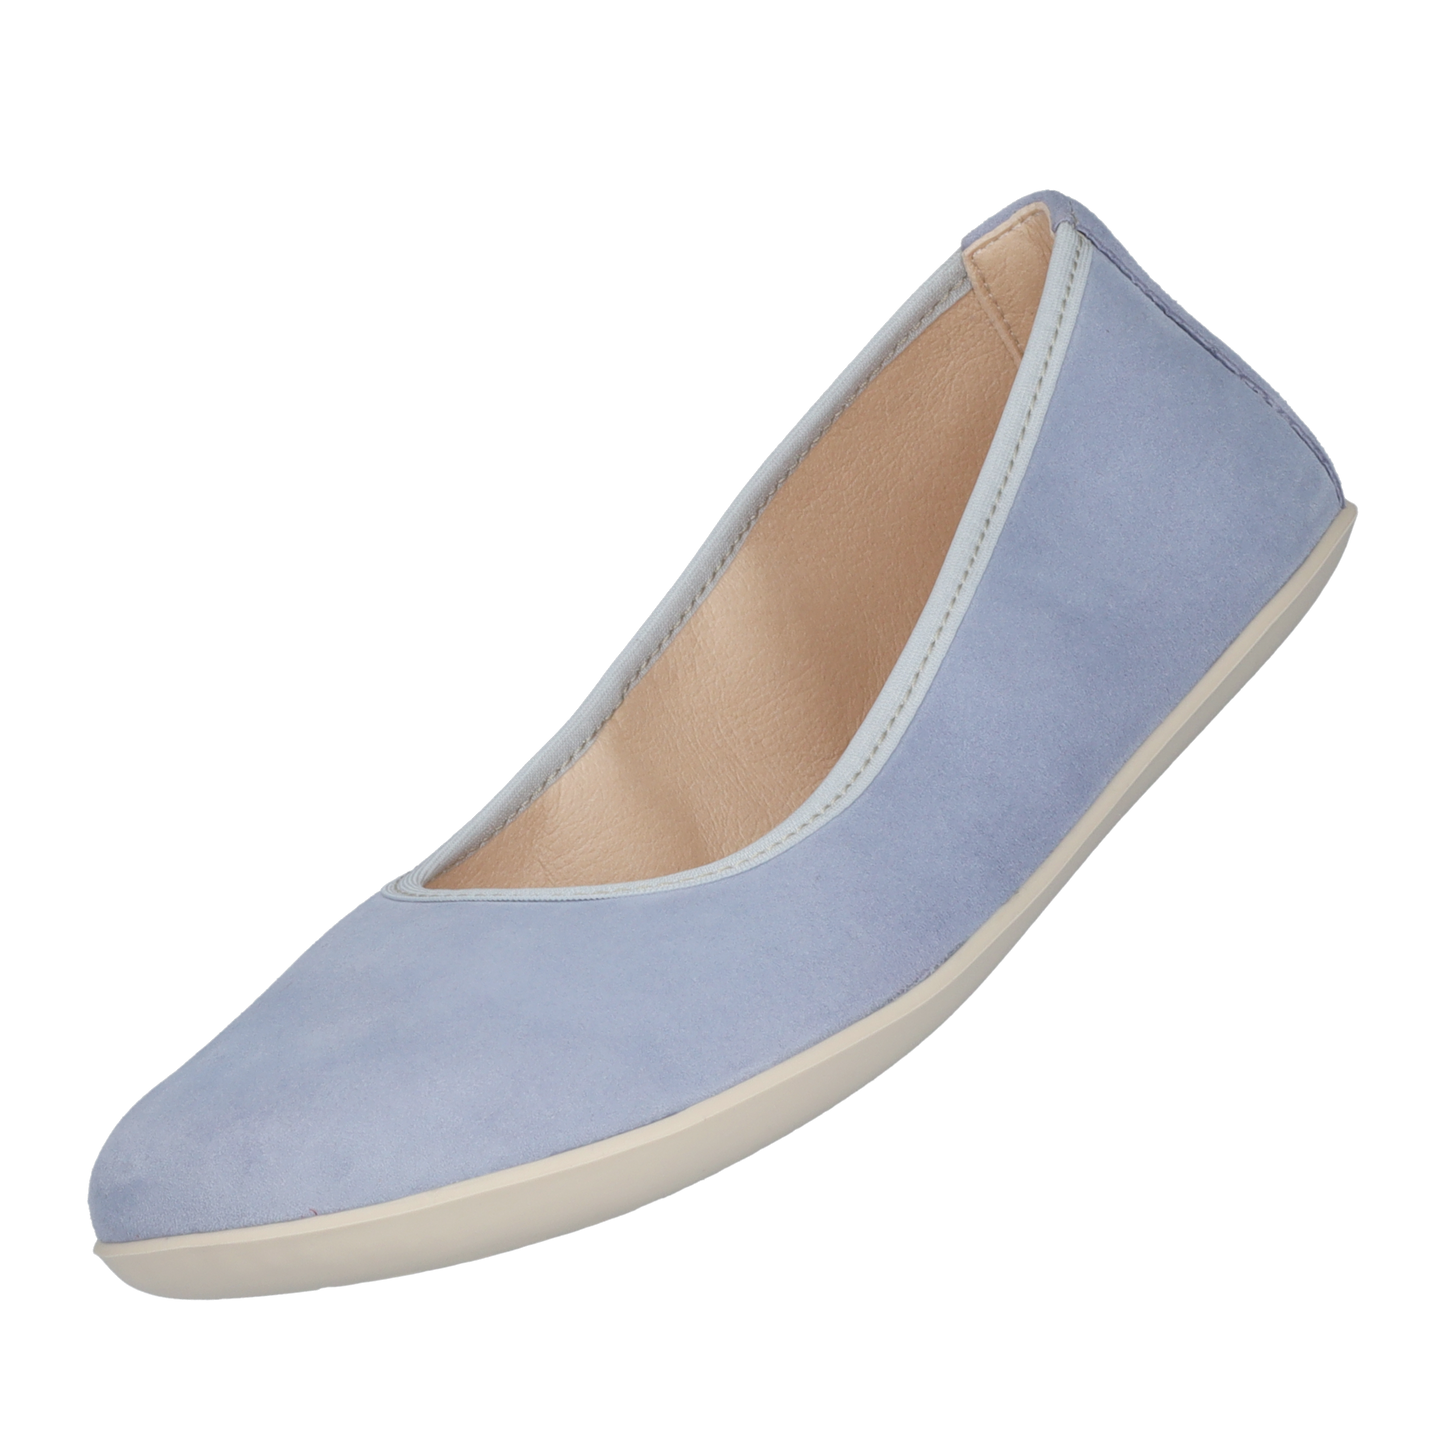 Groundies Lily Soft barfods ballerinaer til kvinder i farven light blue, vinklet